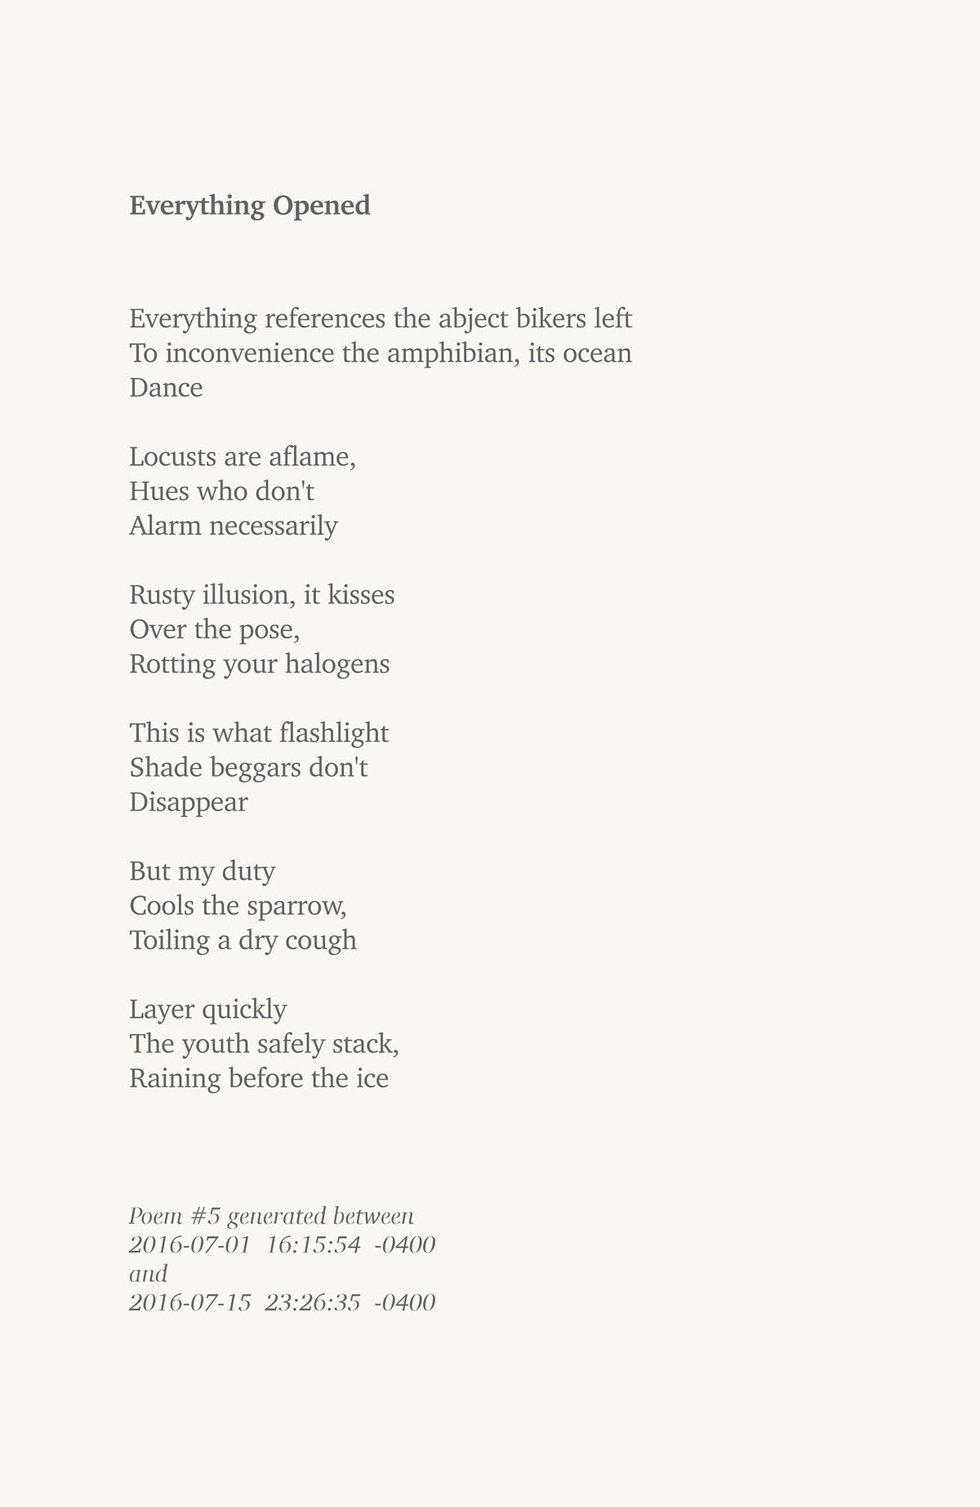 Erdem Taşdelen, “The Quantified Self Poems,” 2016